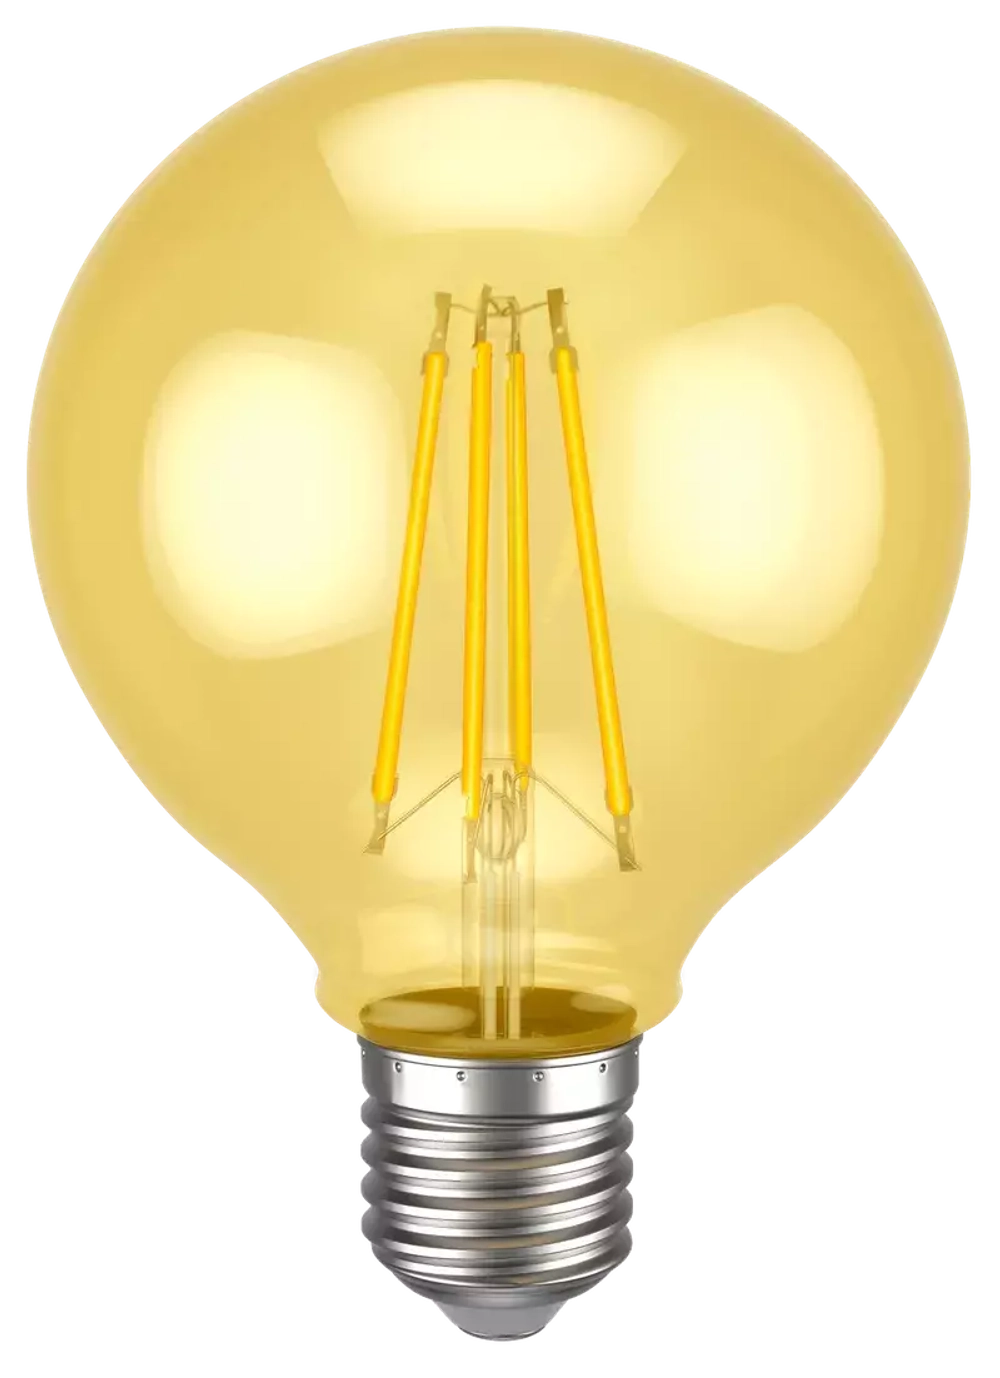 Лампа светодиодная G95 шар золото 8Вт 230В 2700К Е27 серия 360° IEK  LLF-G95-8-230-30-E27-CLG